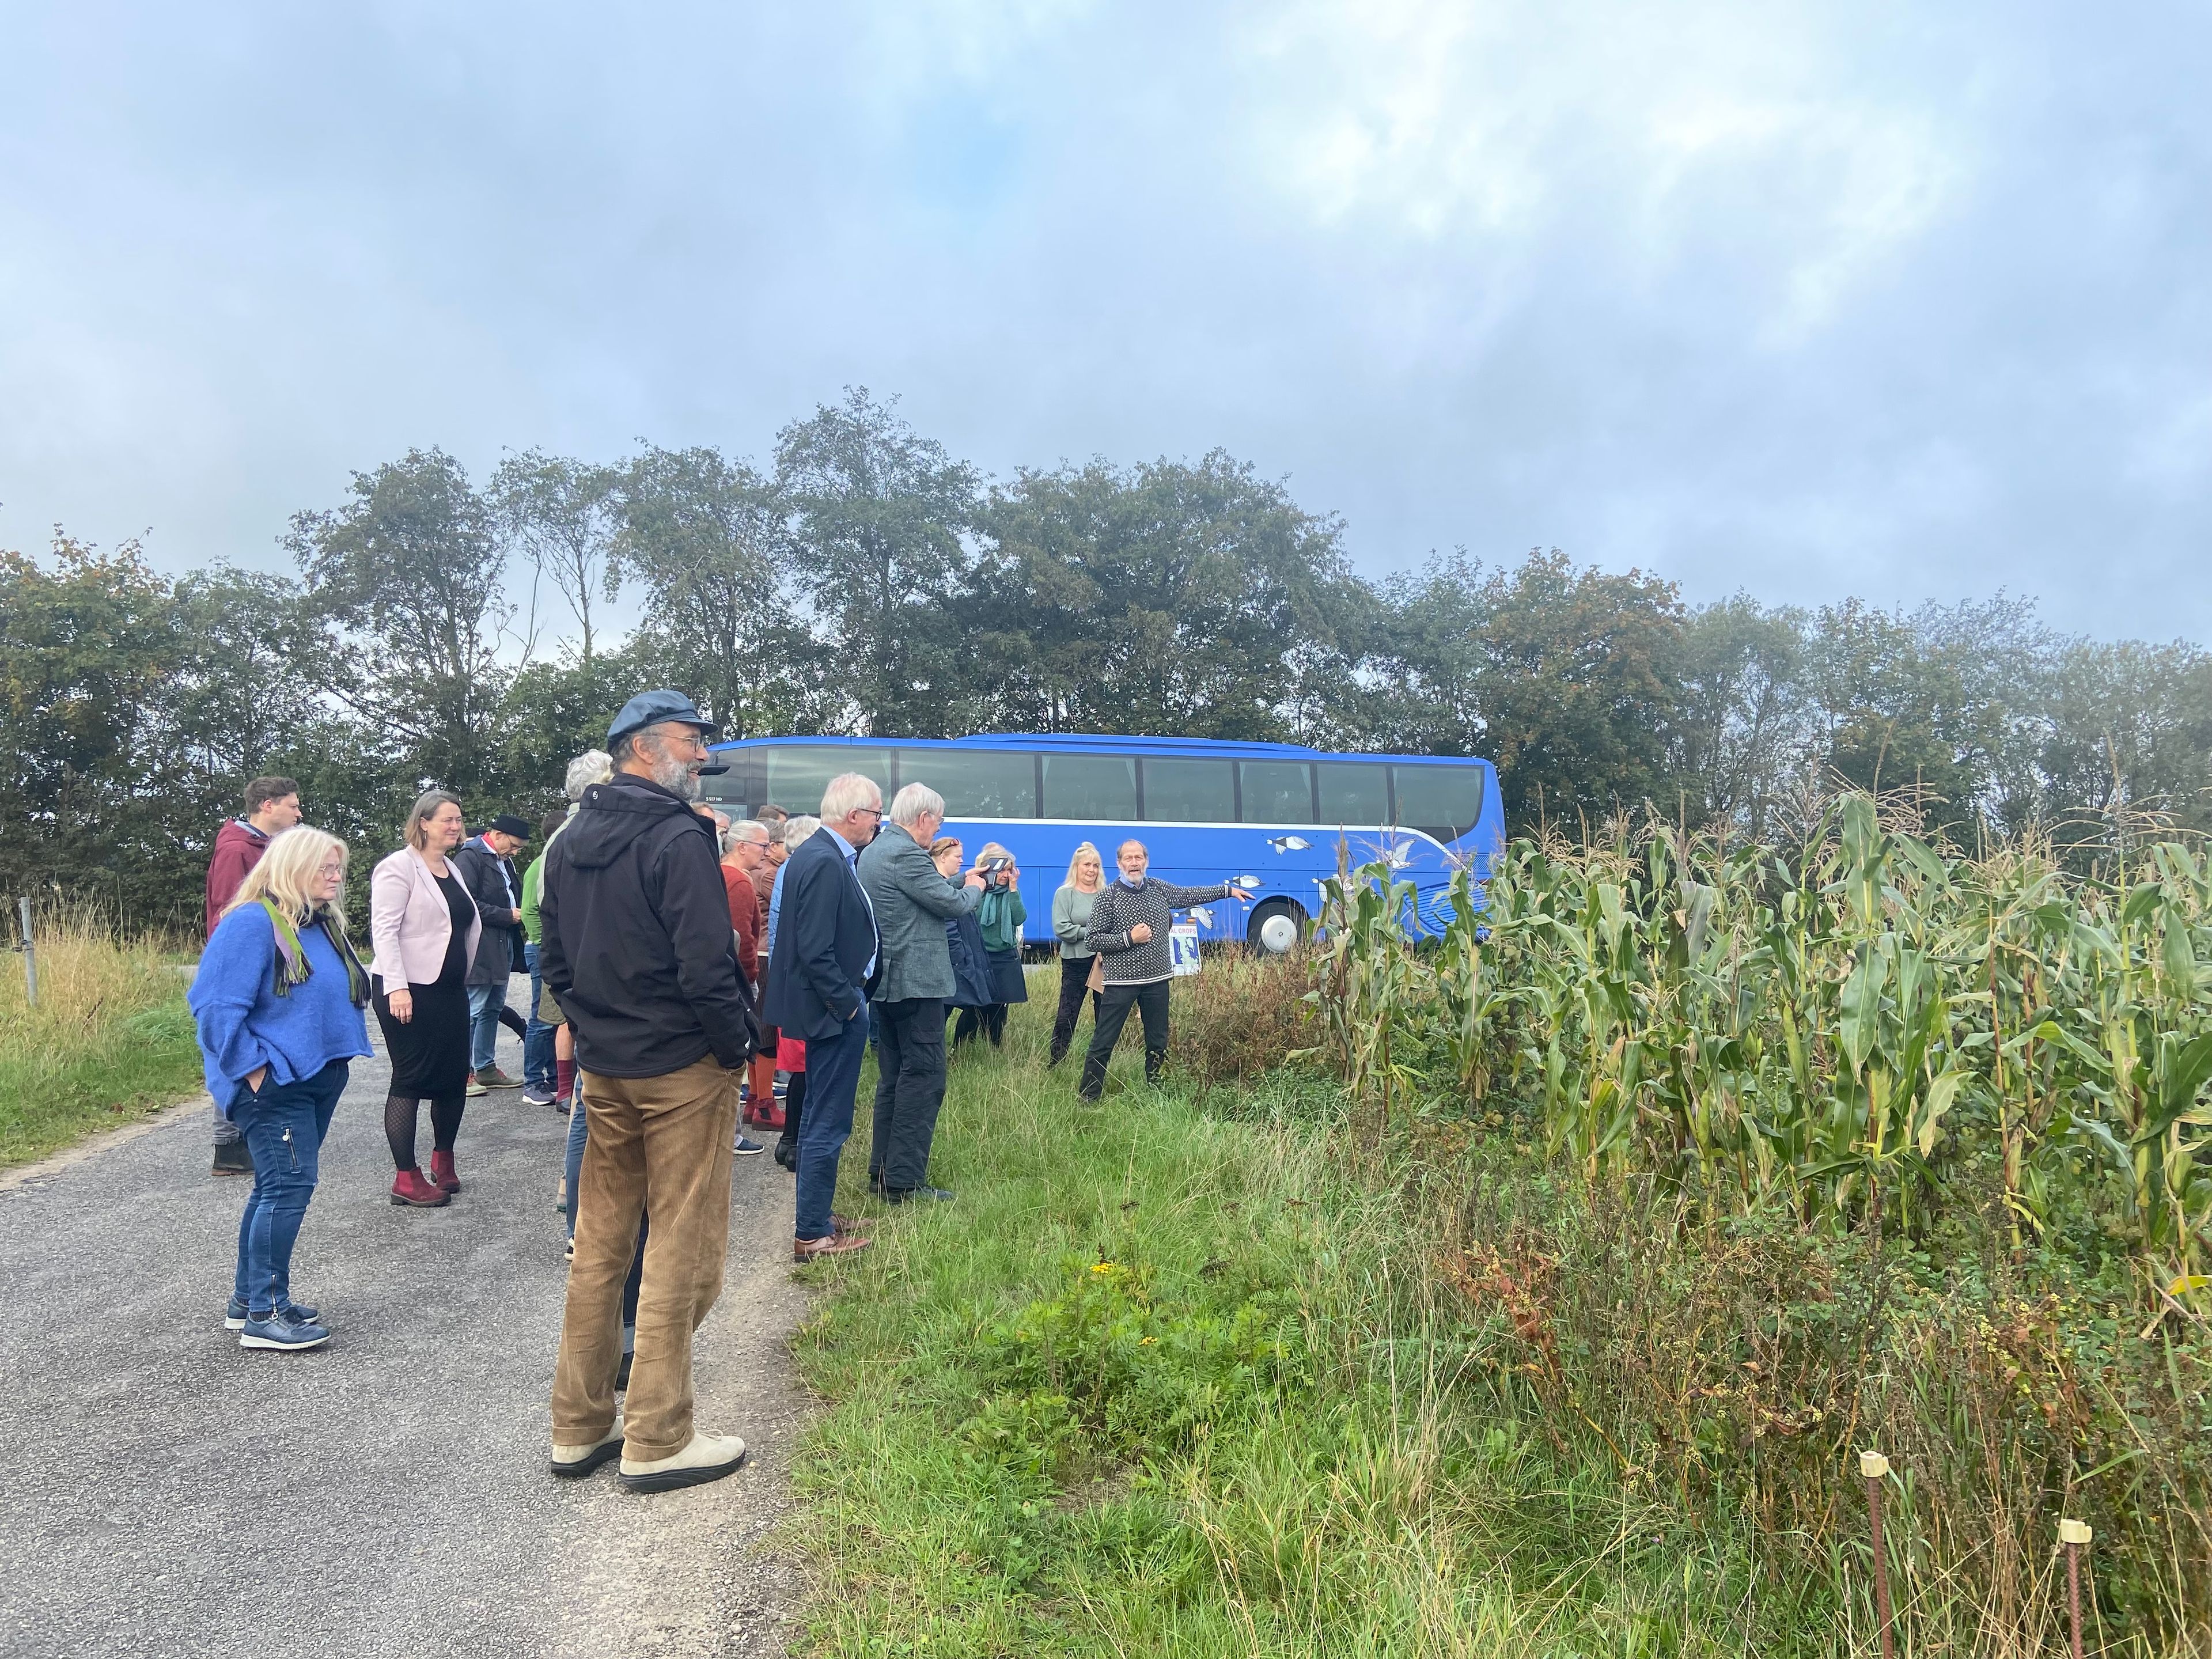 Participants visiting the land art project Criminal Crops (corn field) 